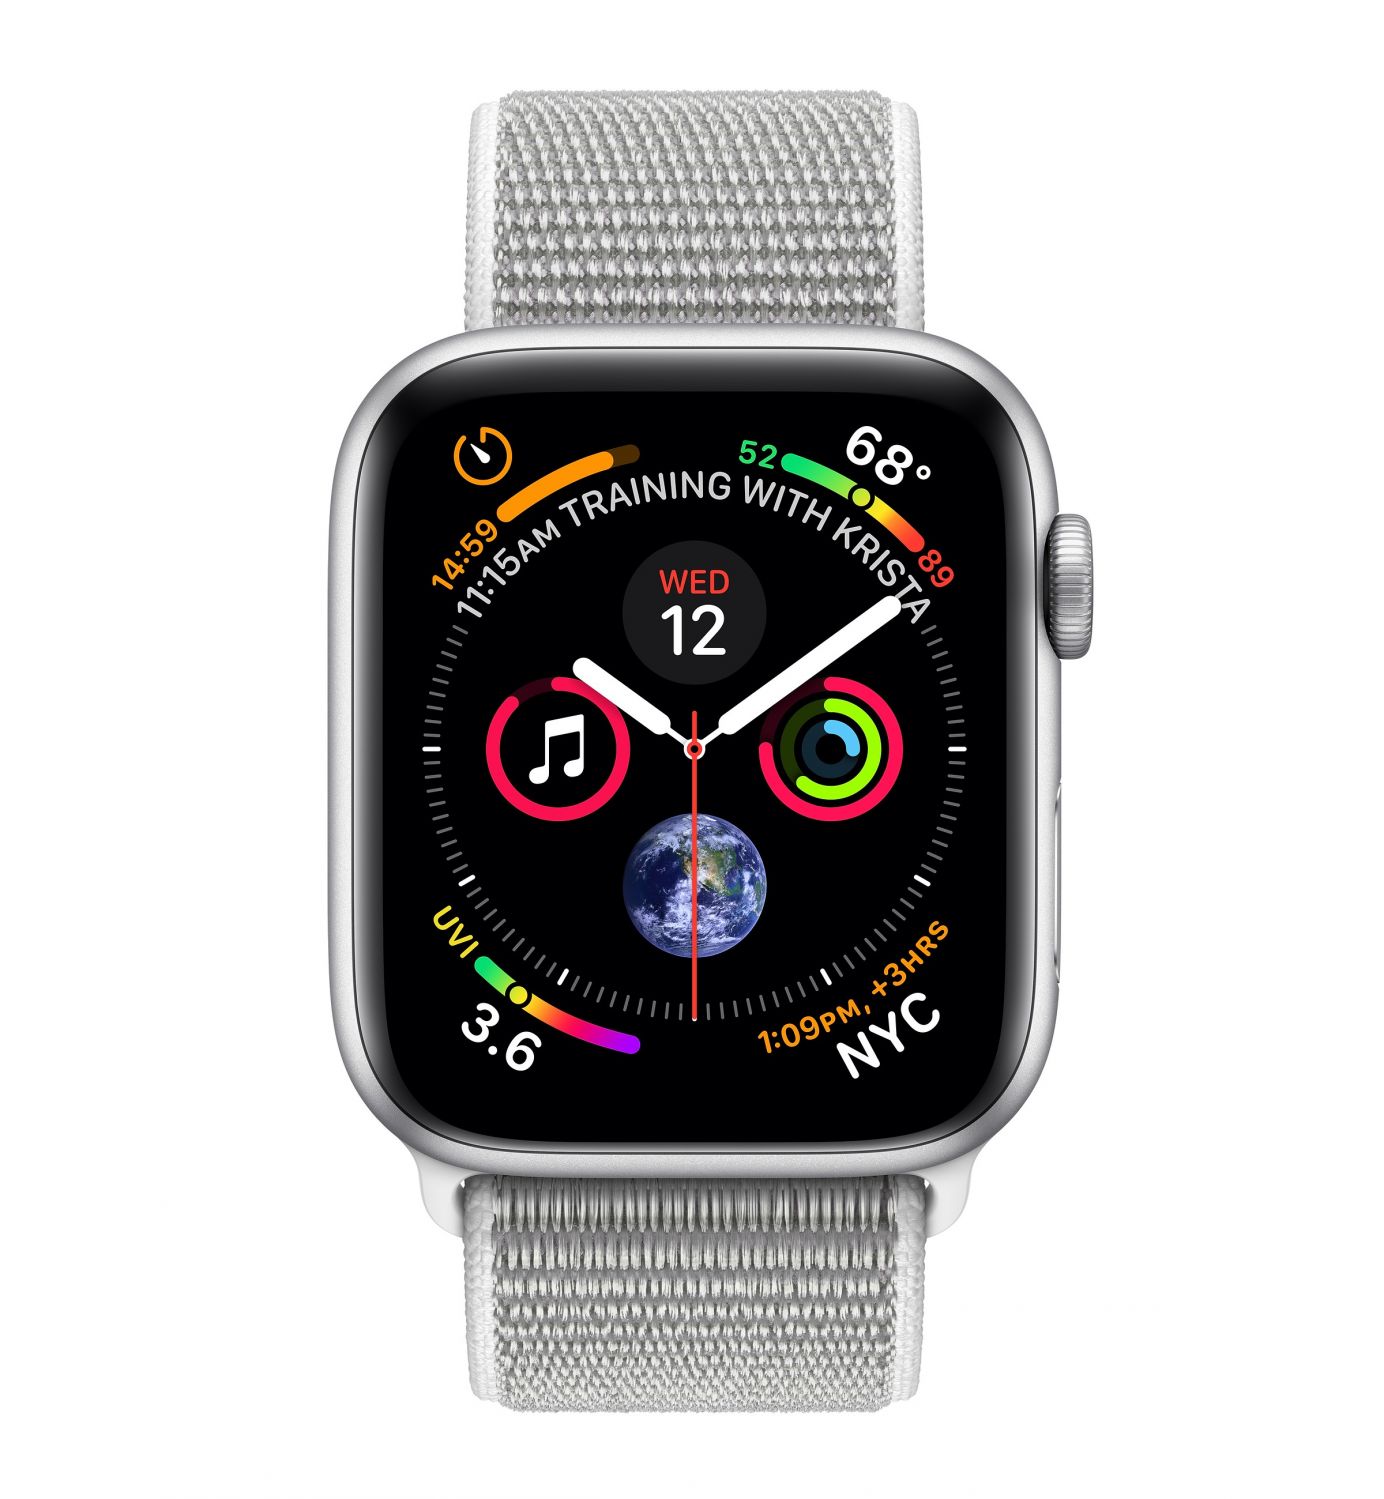 MU652TY/A - Reloj inteligent Apple Watch Seri 4 reloj inteligente Plata OLED GP (satlite)